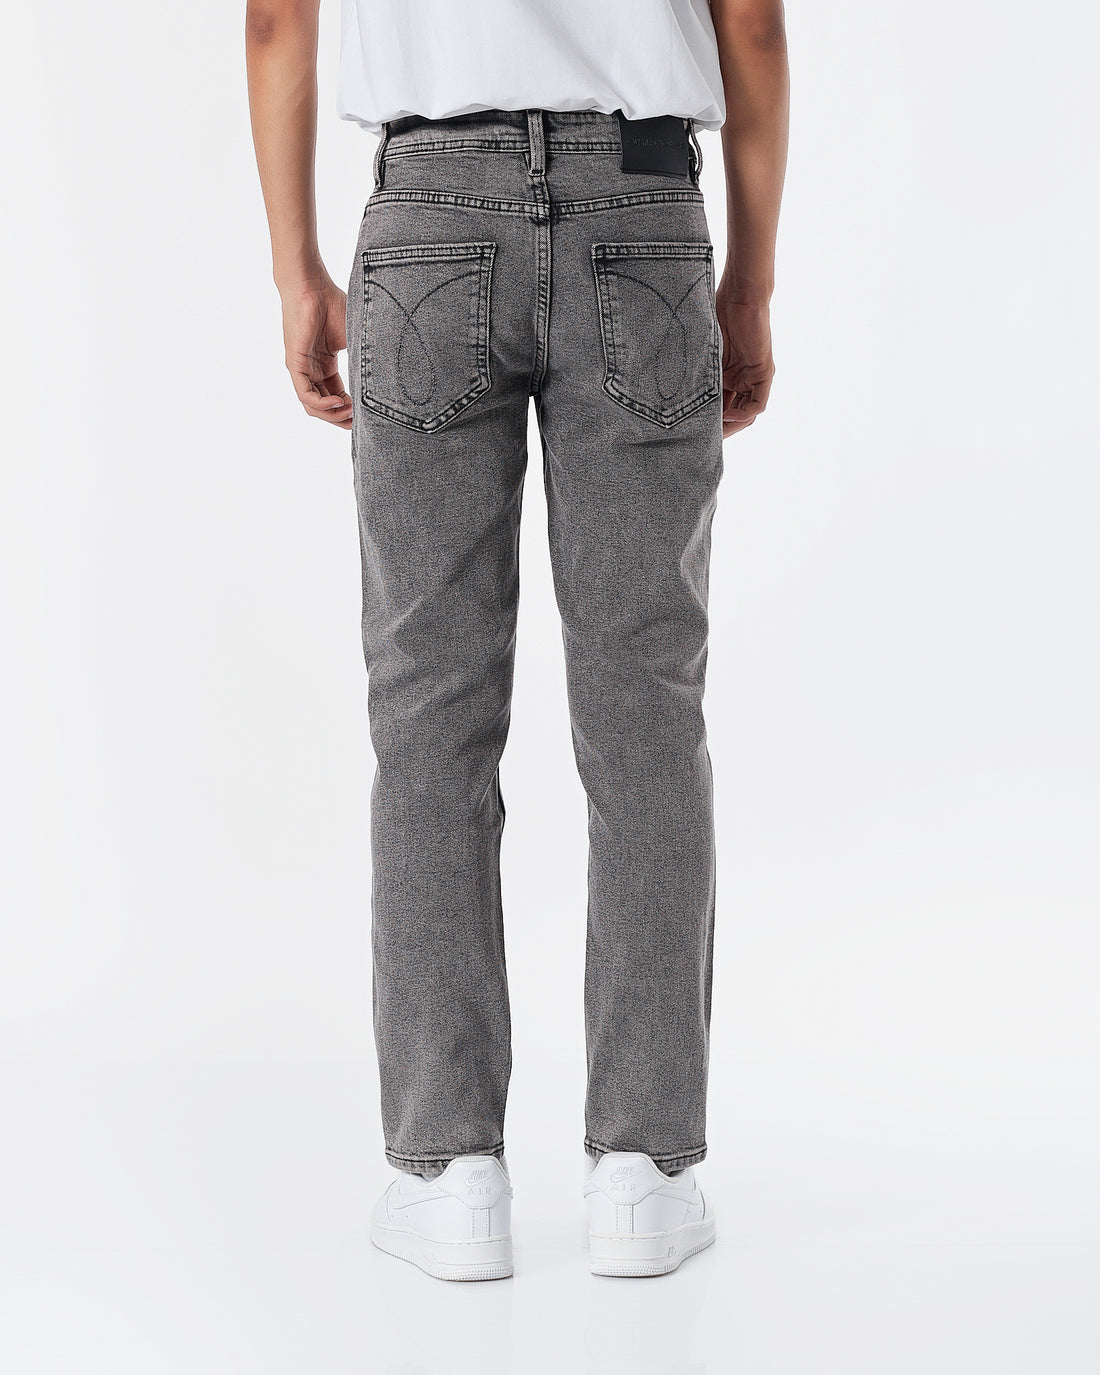 CK Men Dark Grey Skiinny Fit Jeans 26.90